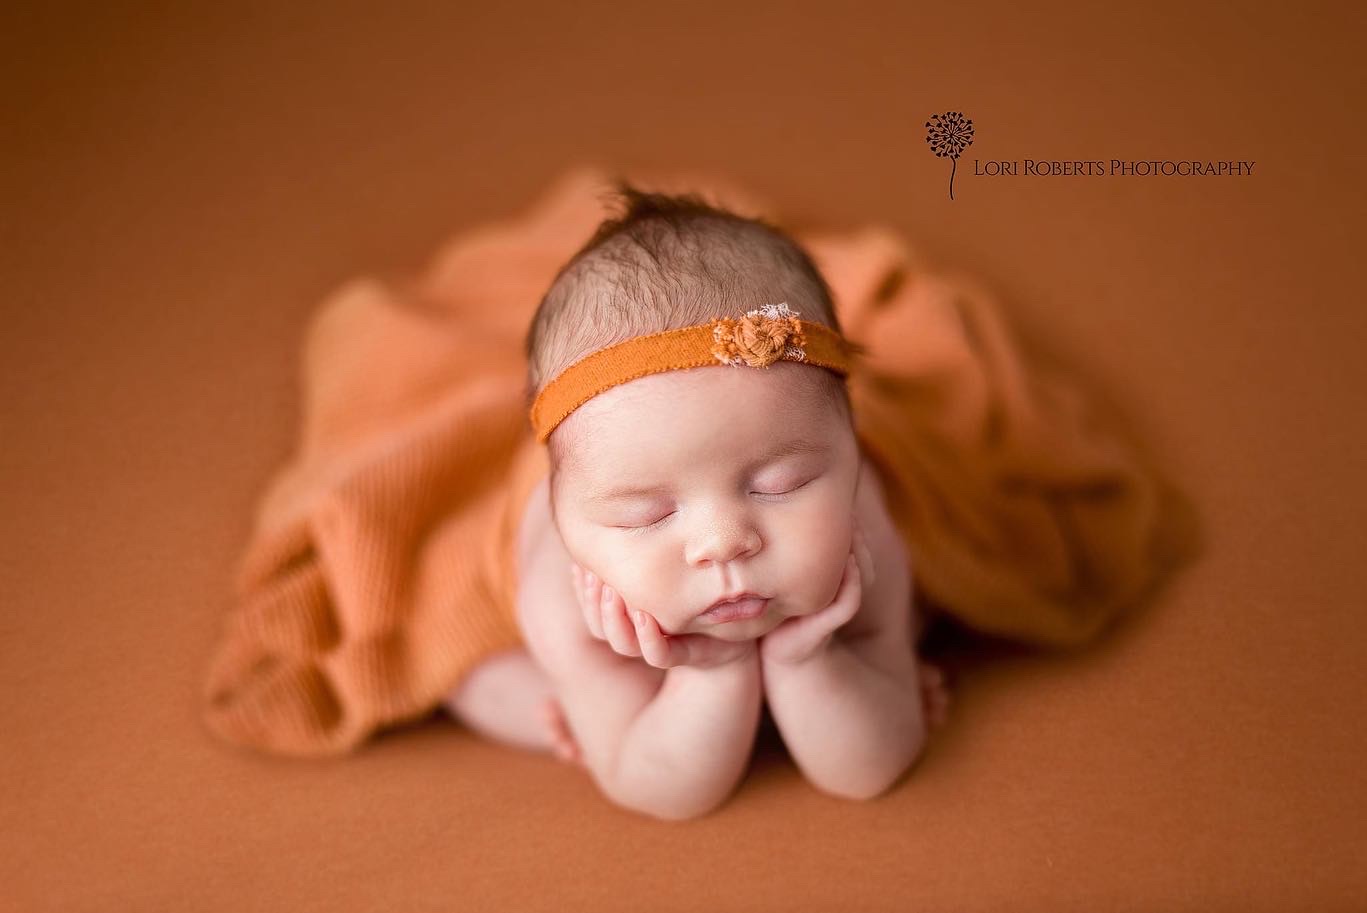 Newborn Posed photography